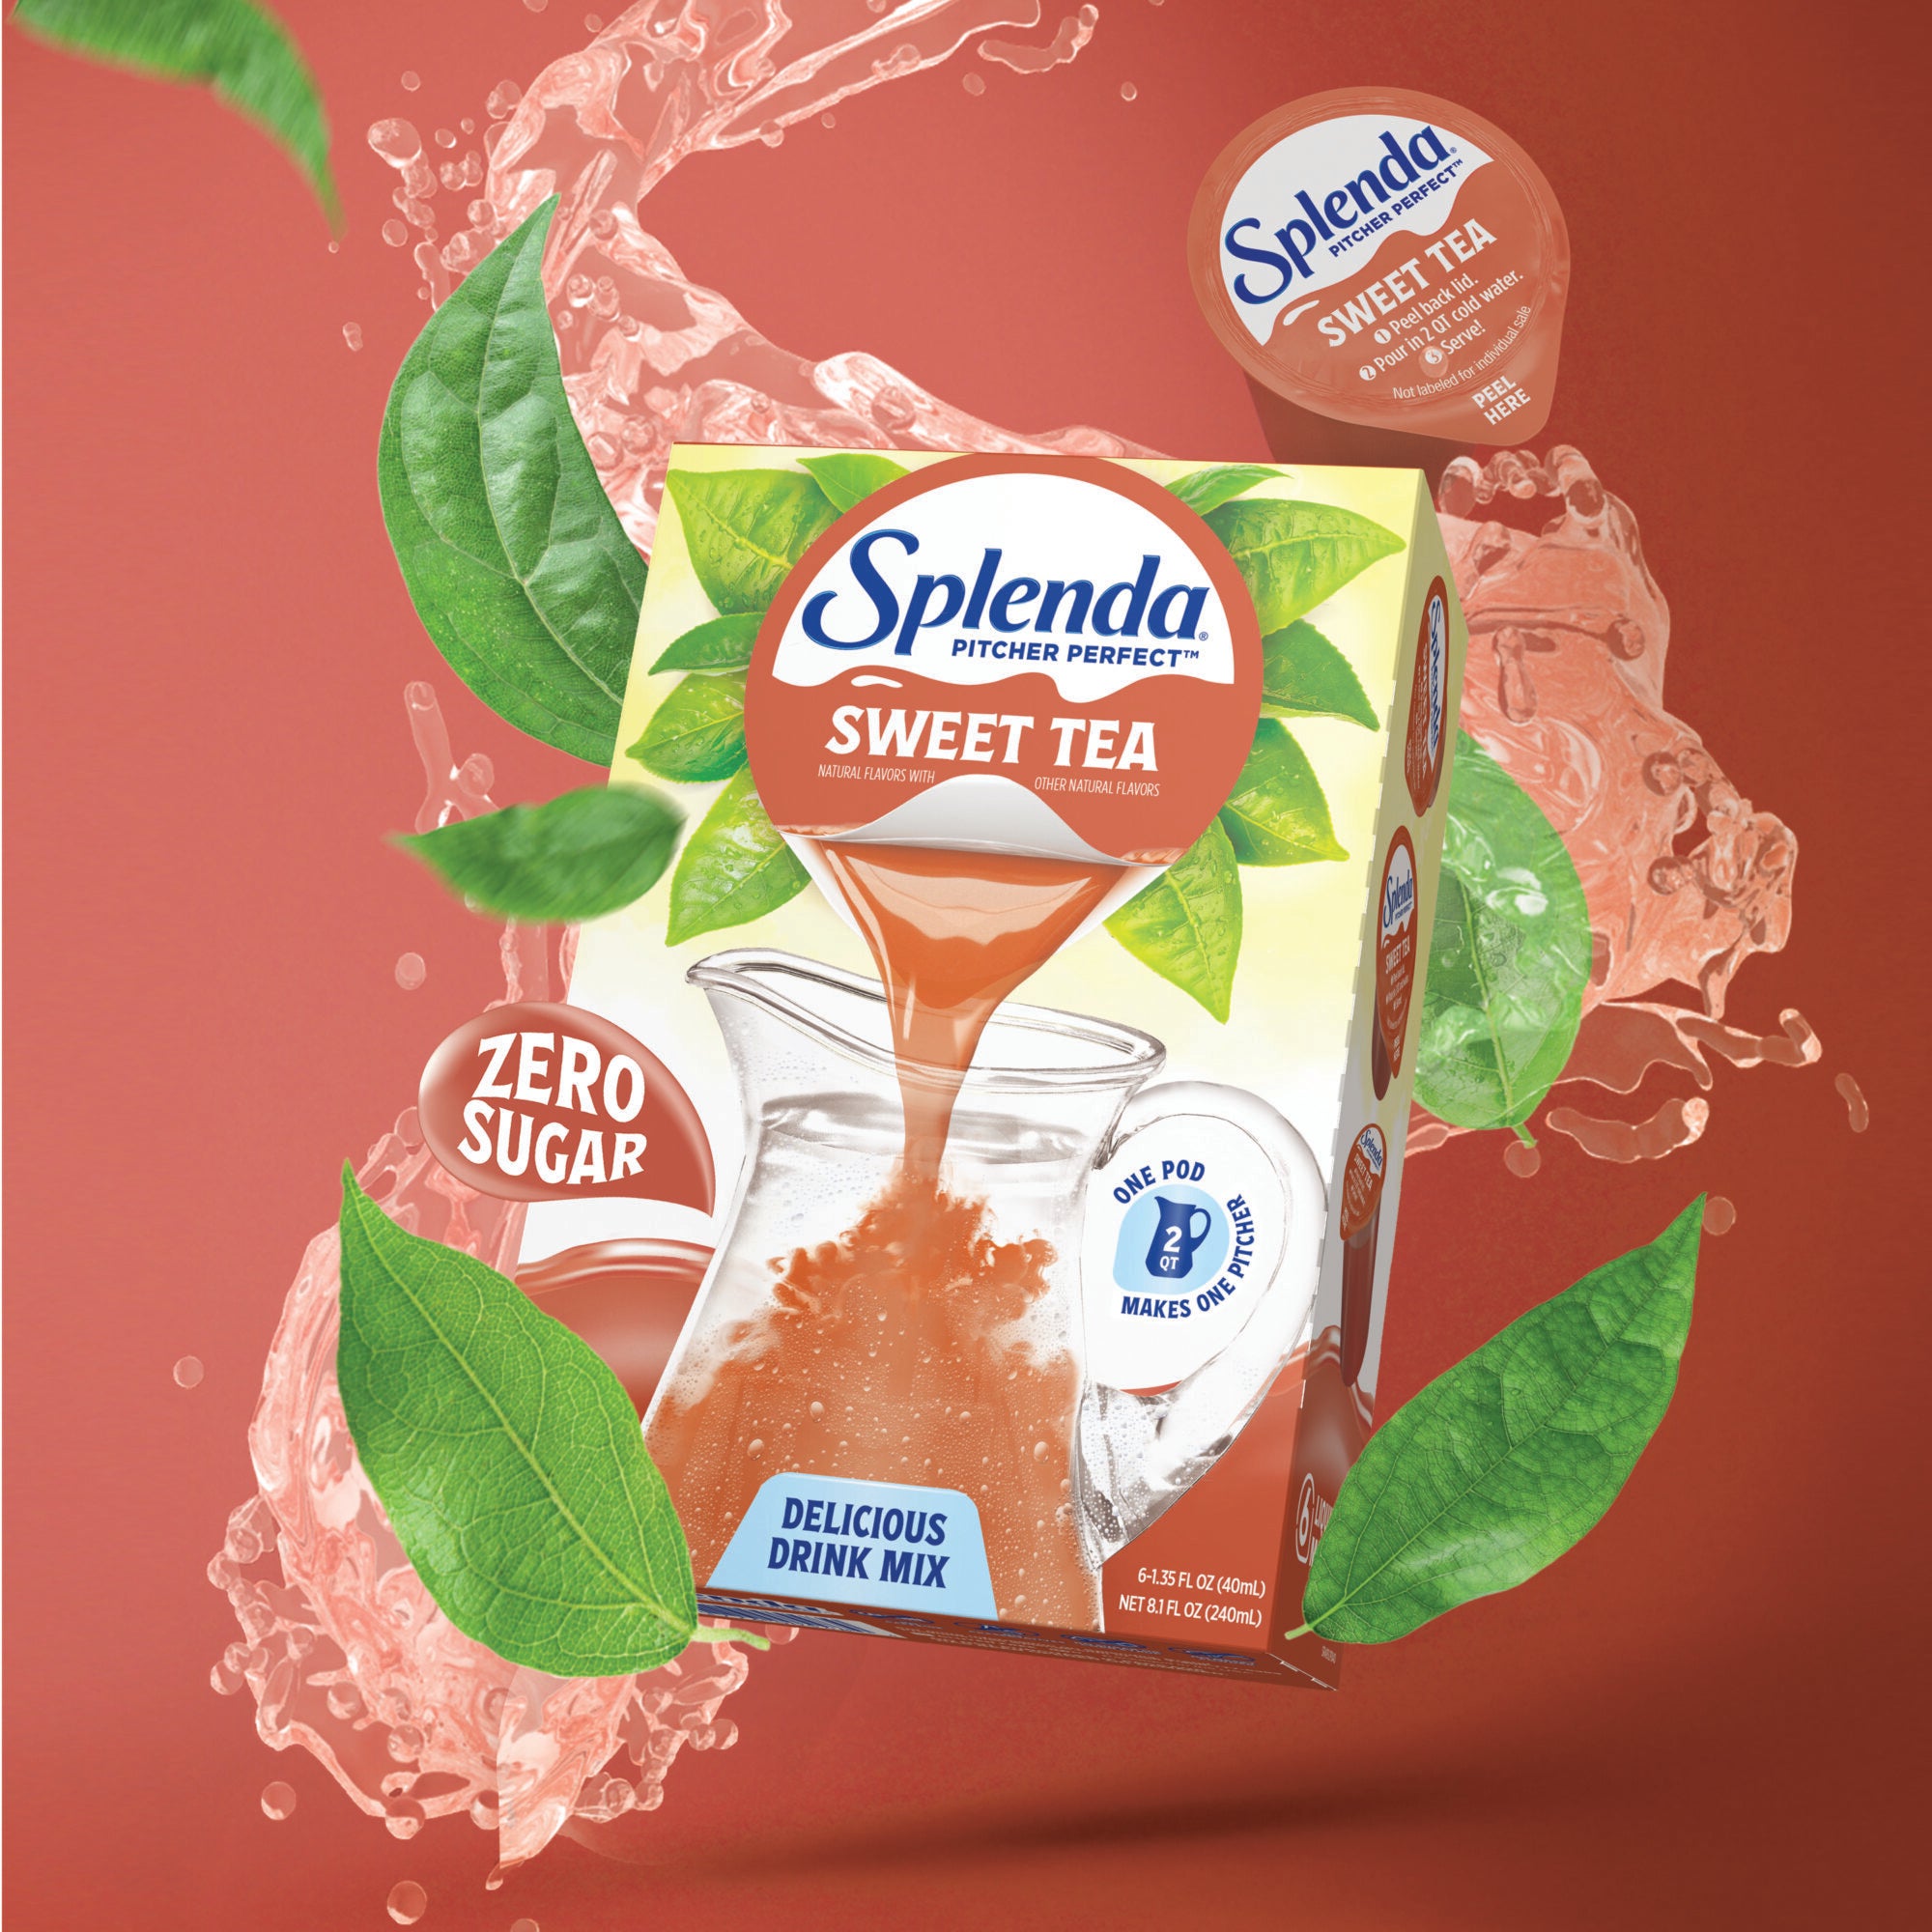 Splenda Pitcher Perfect Sweet Tea Zero Sugar Drink Mix – Flavor Burst